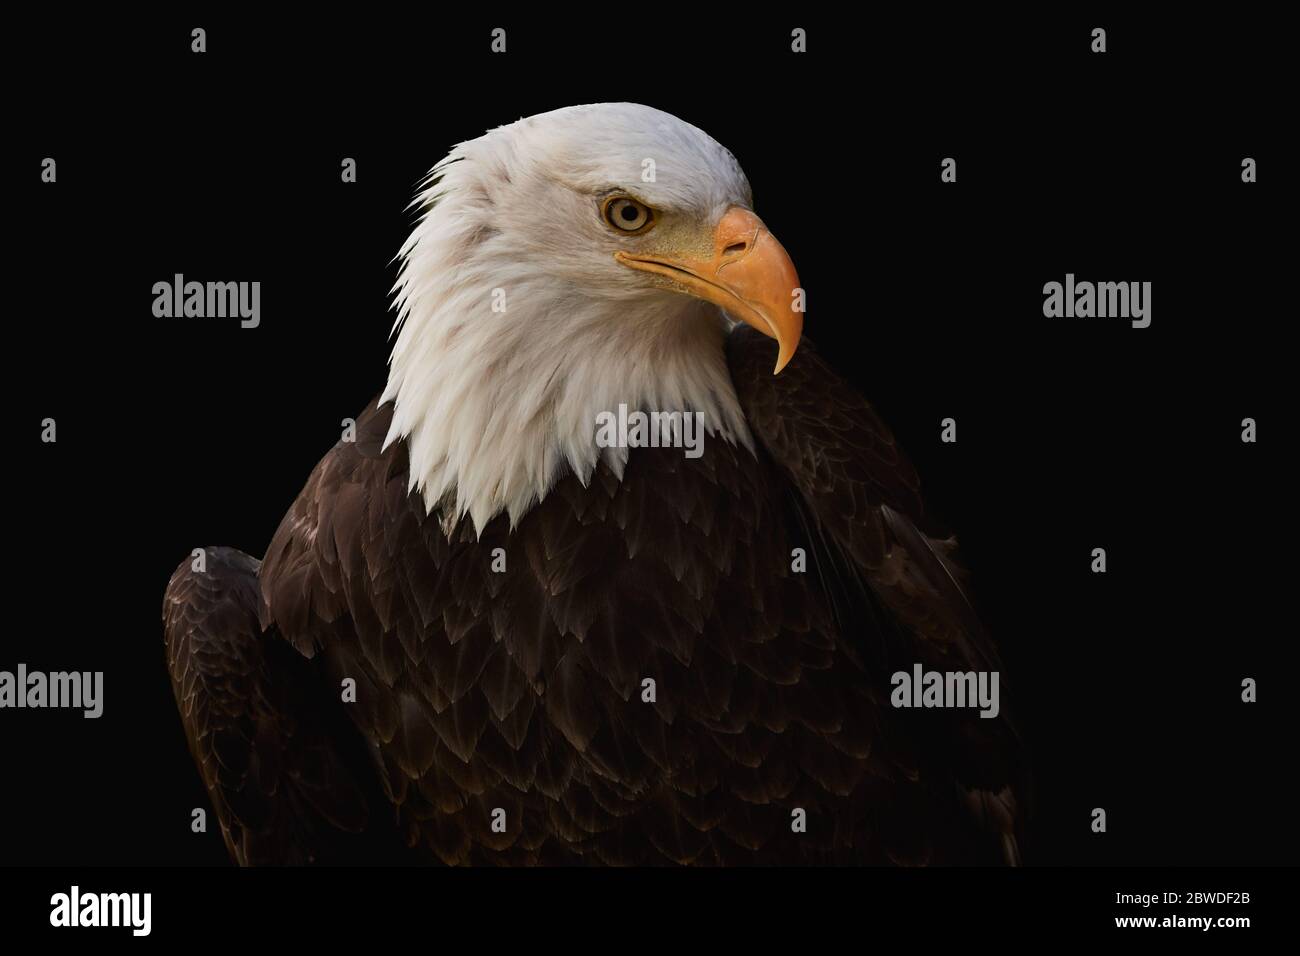 Close-up of a bald eagle (Haliaeetus leucocephalus), the symbol of strength and freedom of America. Stock Photo